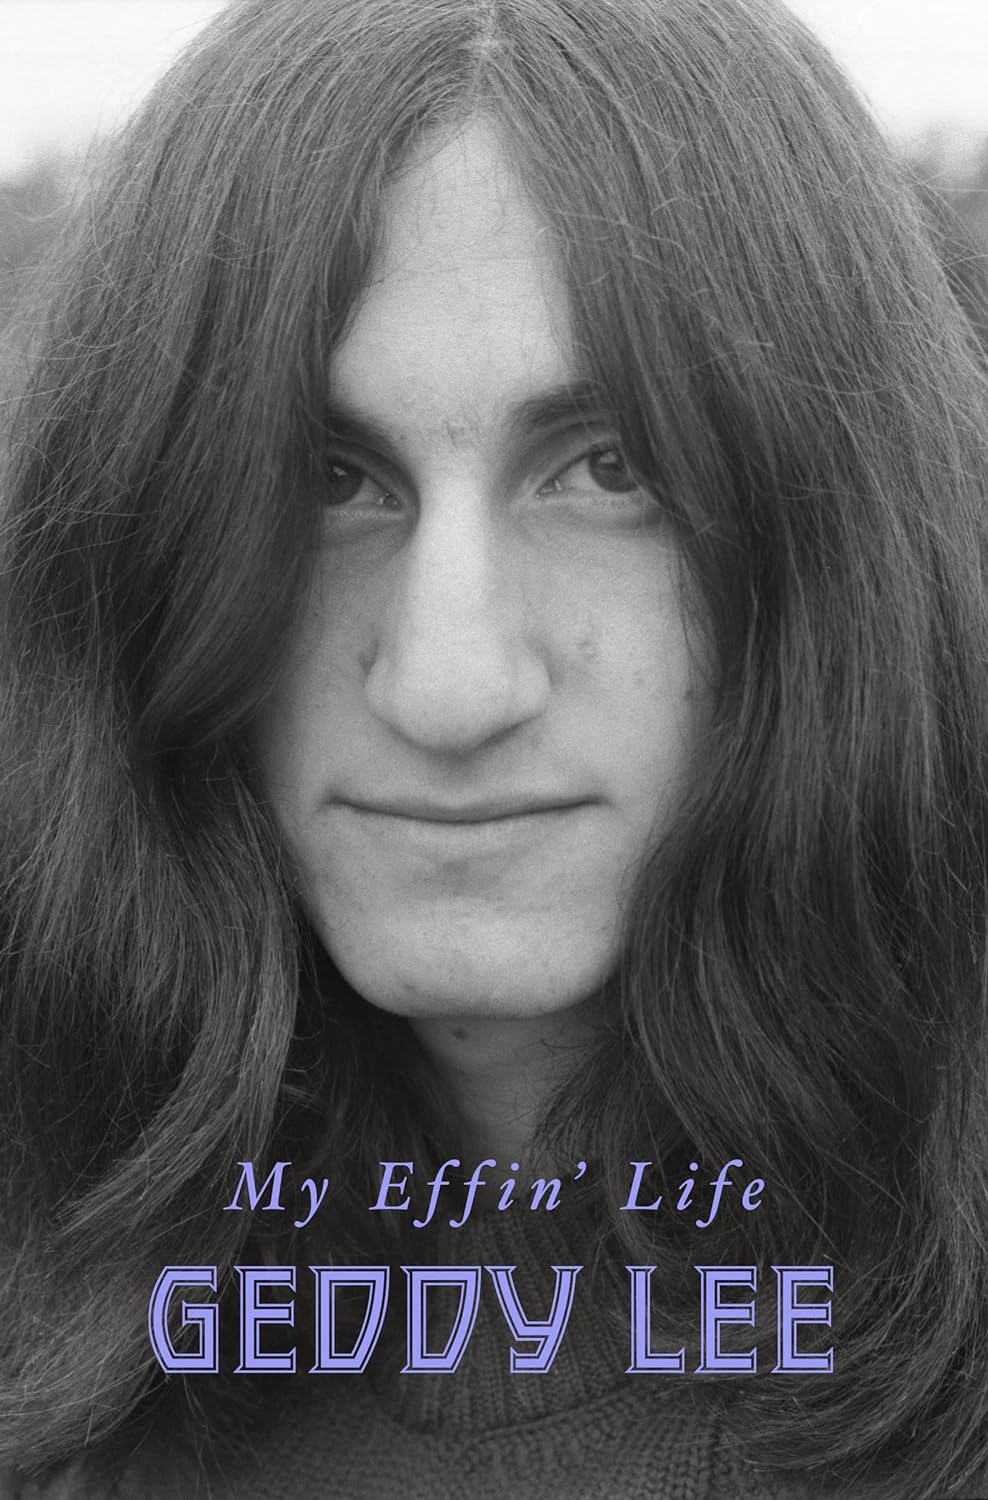 Geddy Lee: My Effin' Life (Hardcover, Harper)